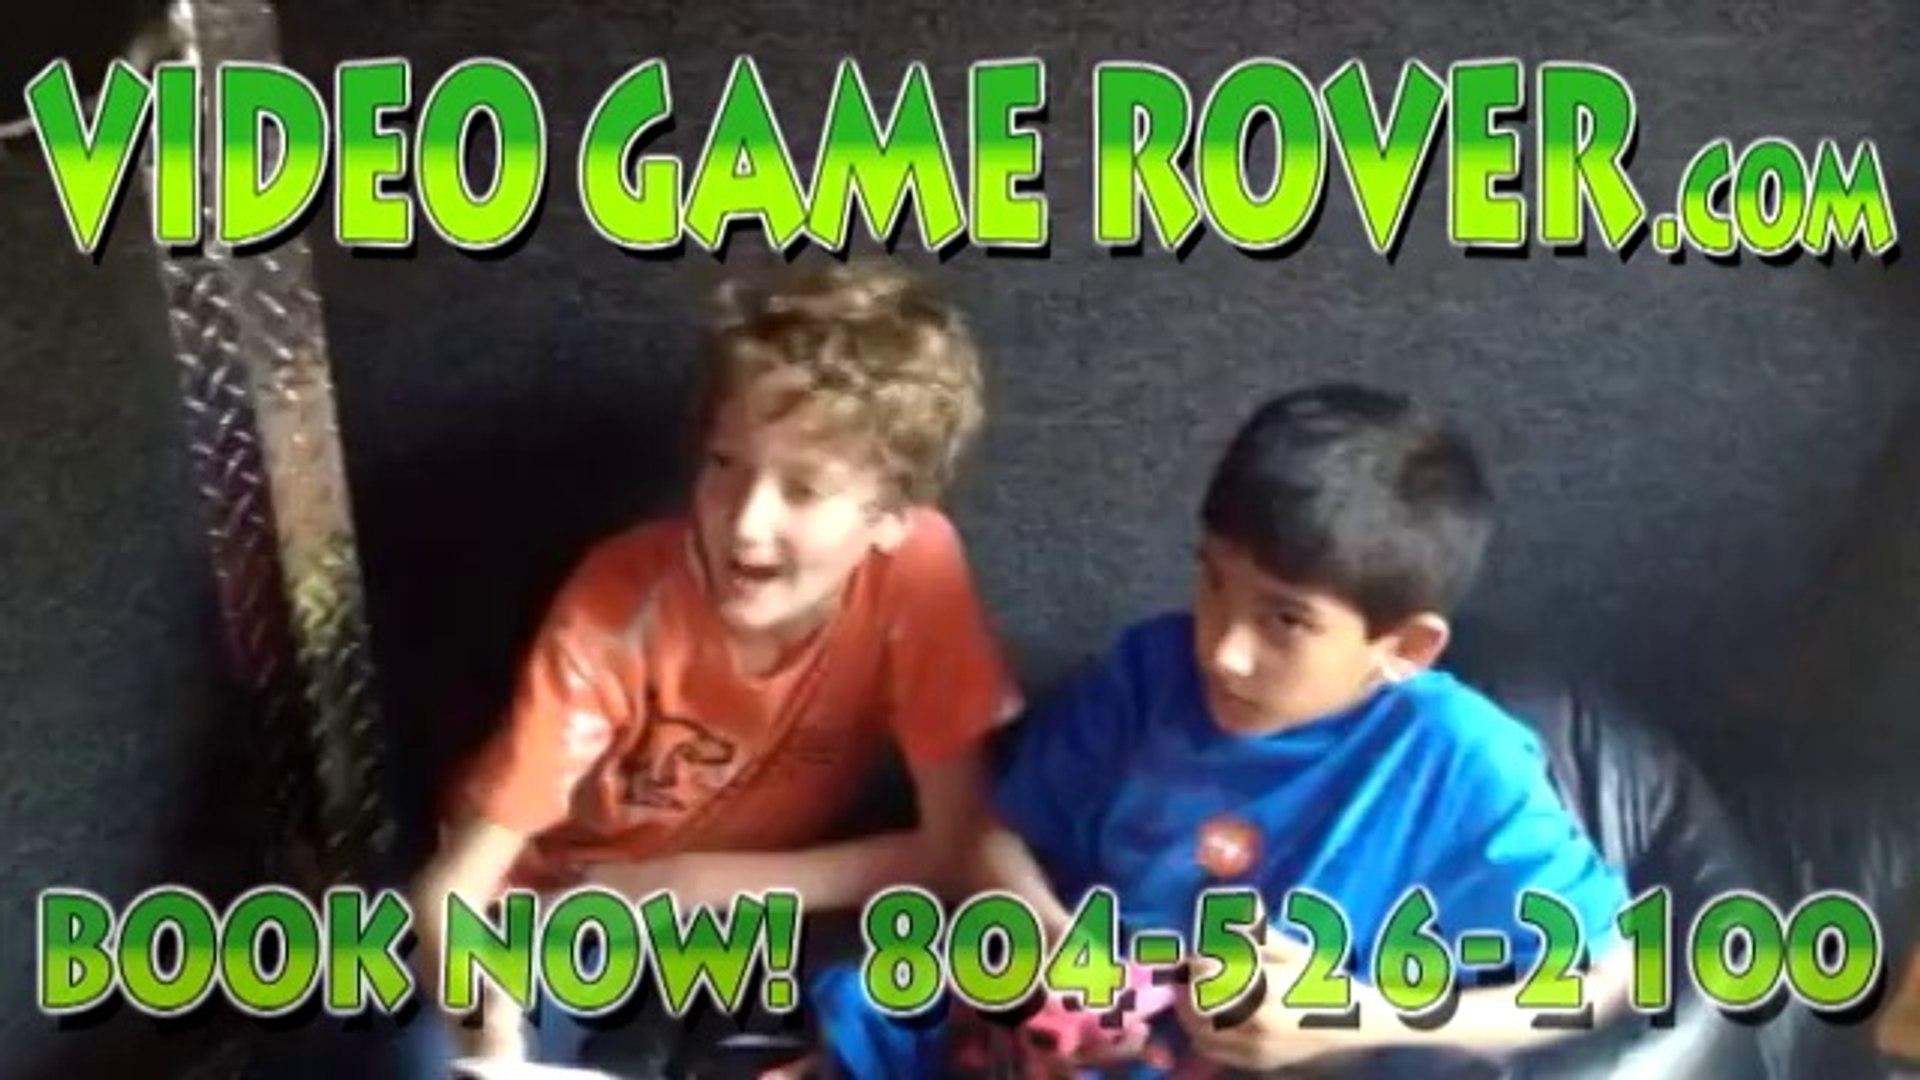 ⁣Mobile Video Game Trailer - Video Game Rover in Richmond, Virginia